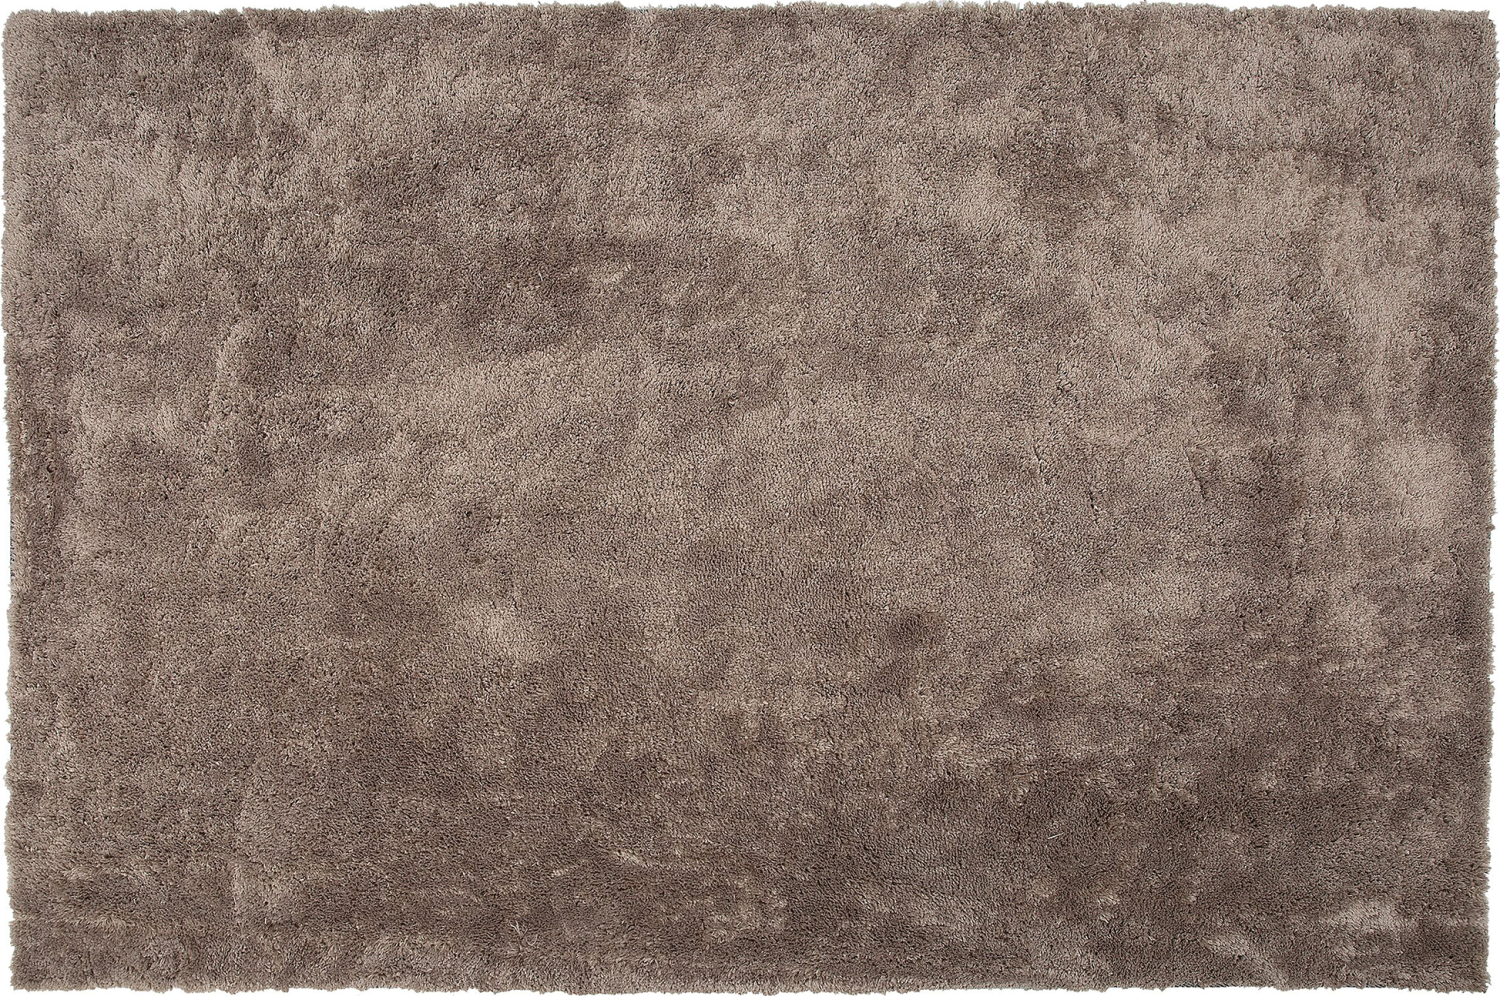 Teppich hellbraun 200 x 300 cm EVREN Bild 1